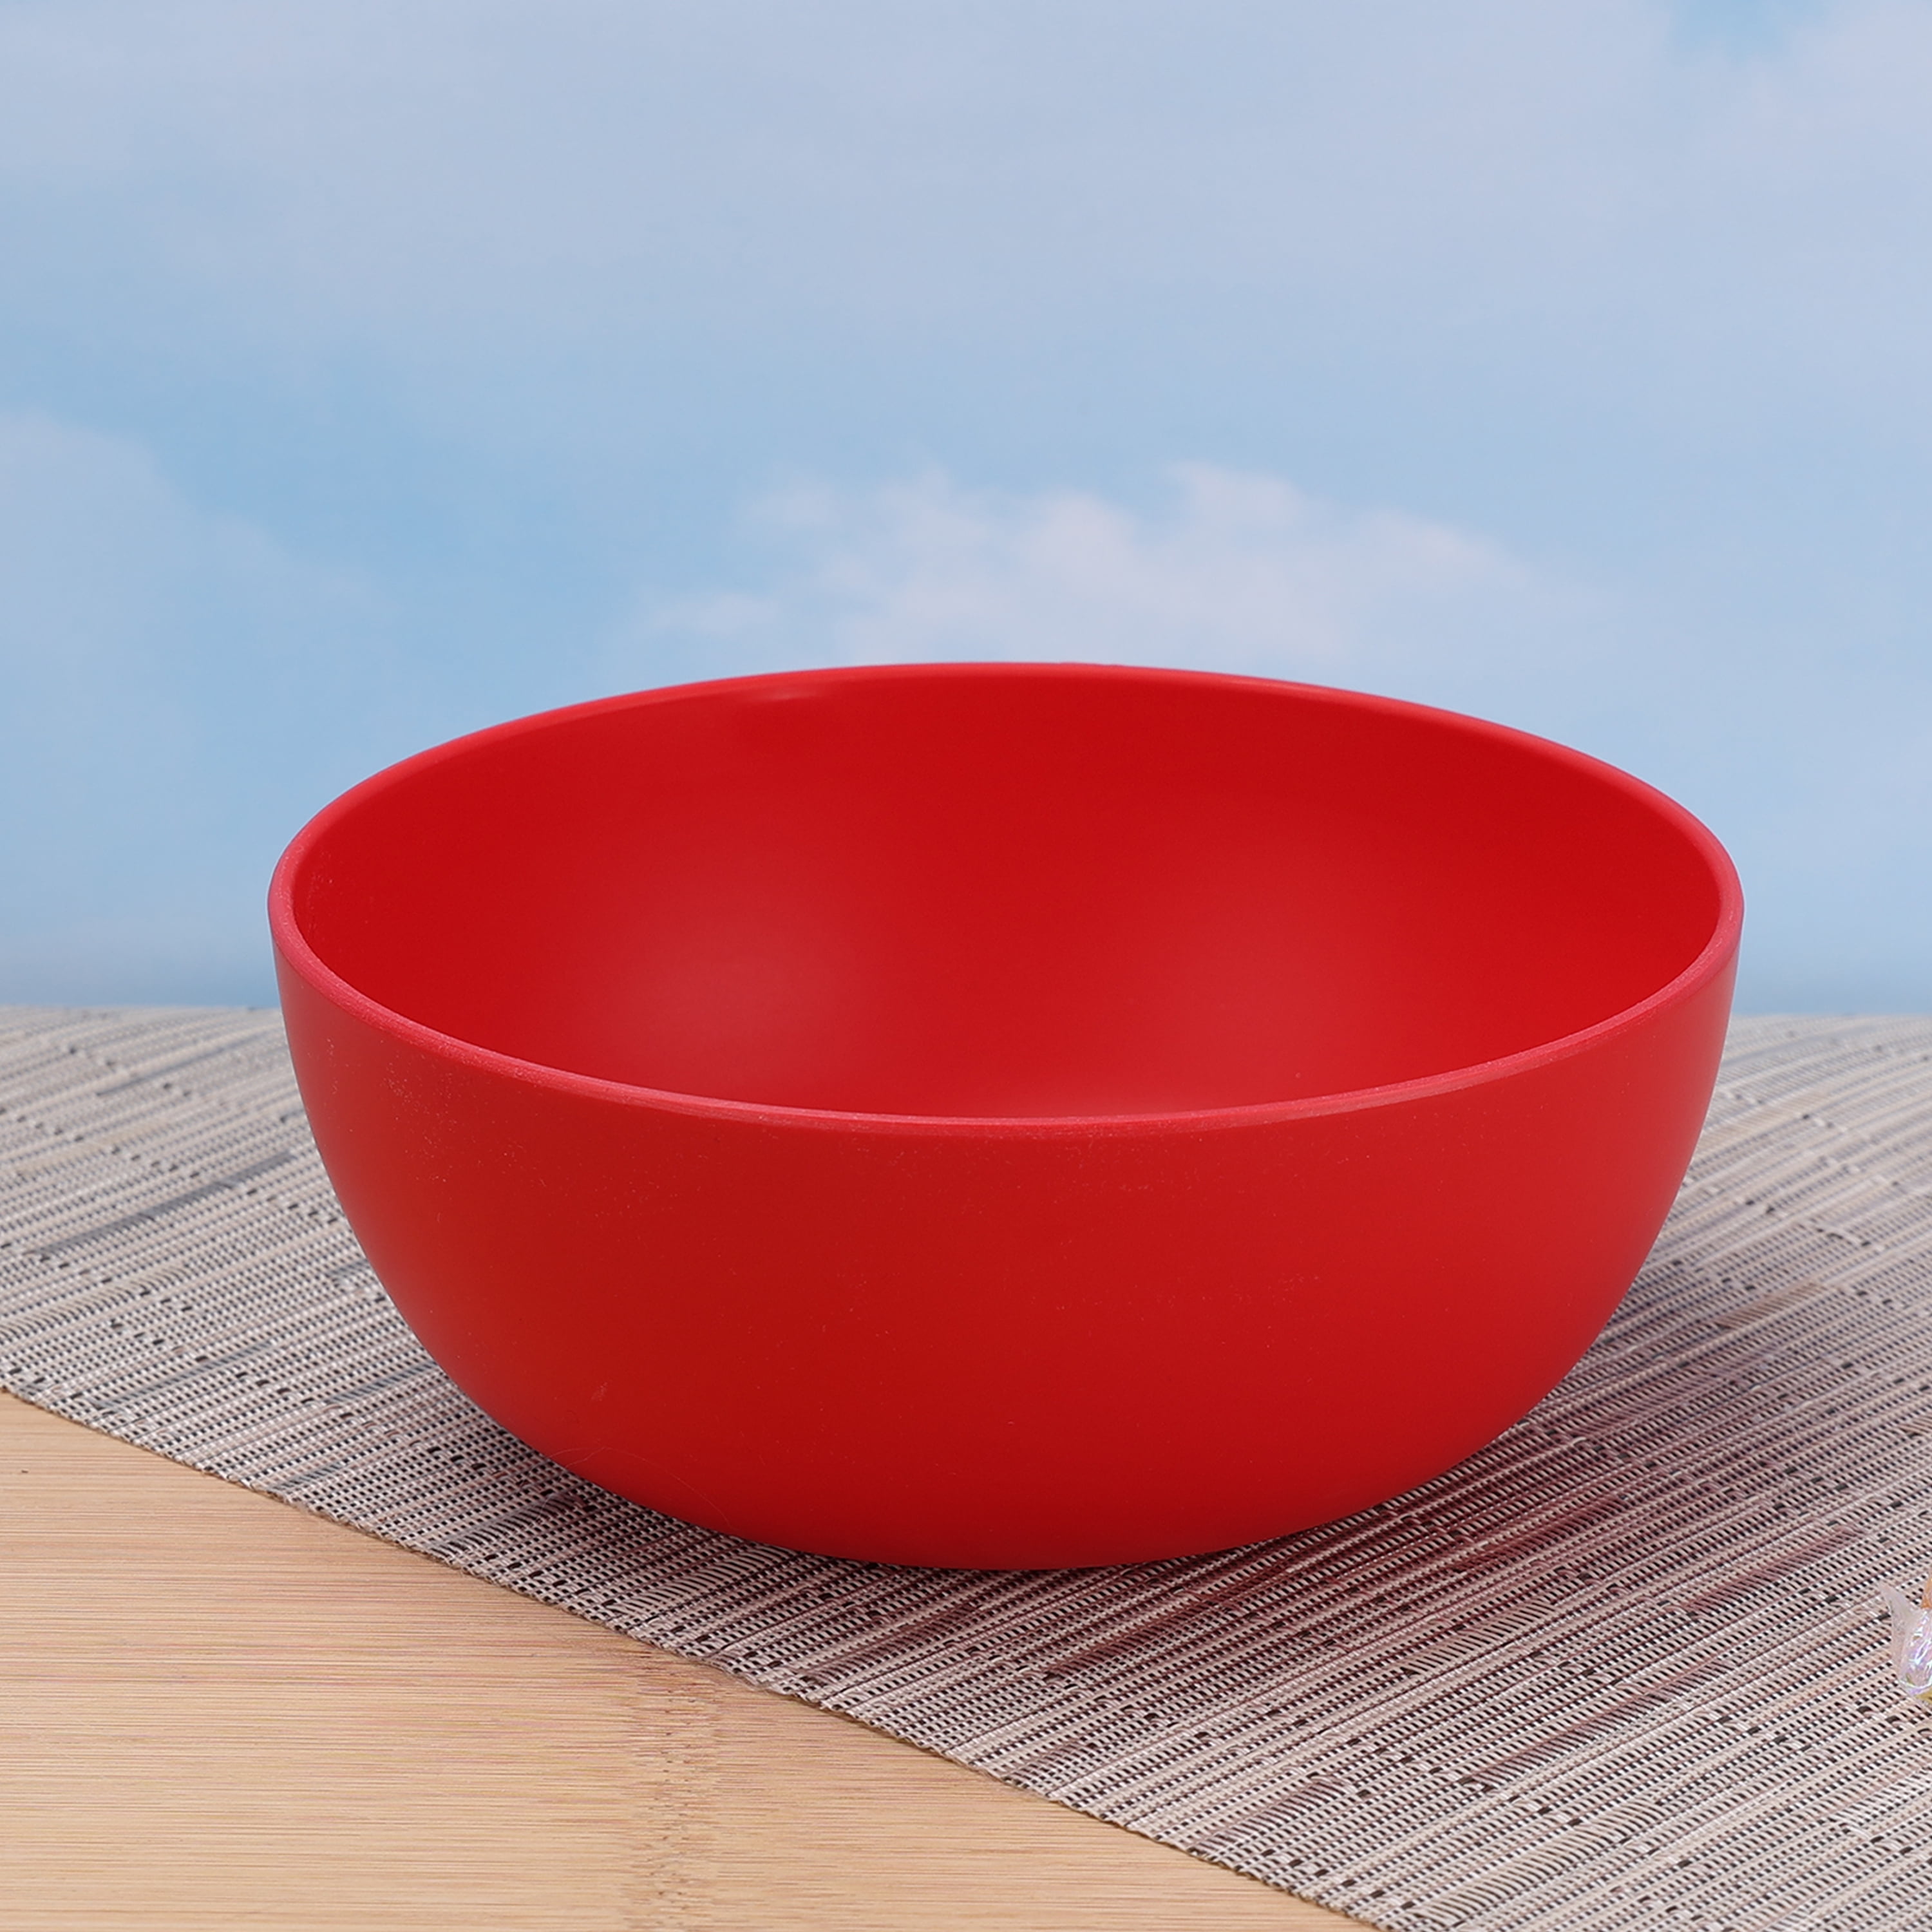 5 qt. Swirl Plastic Bowl - Apple Red